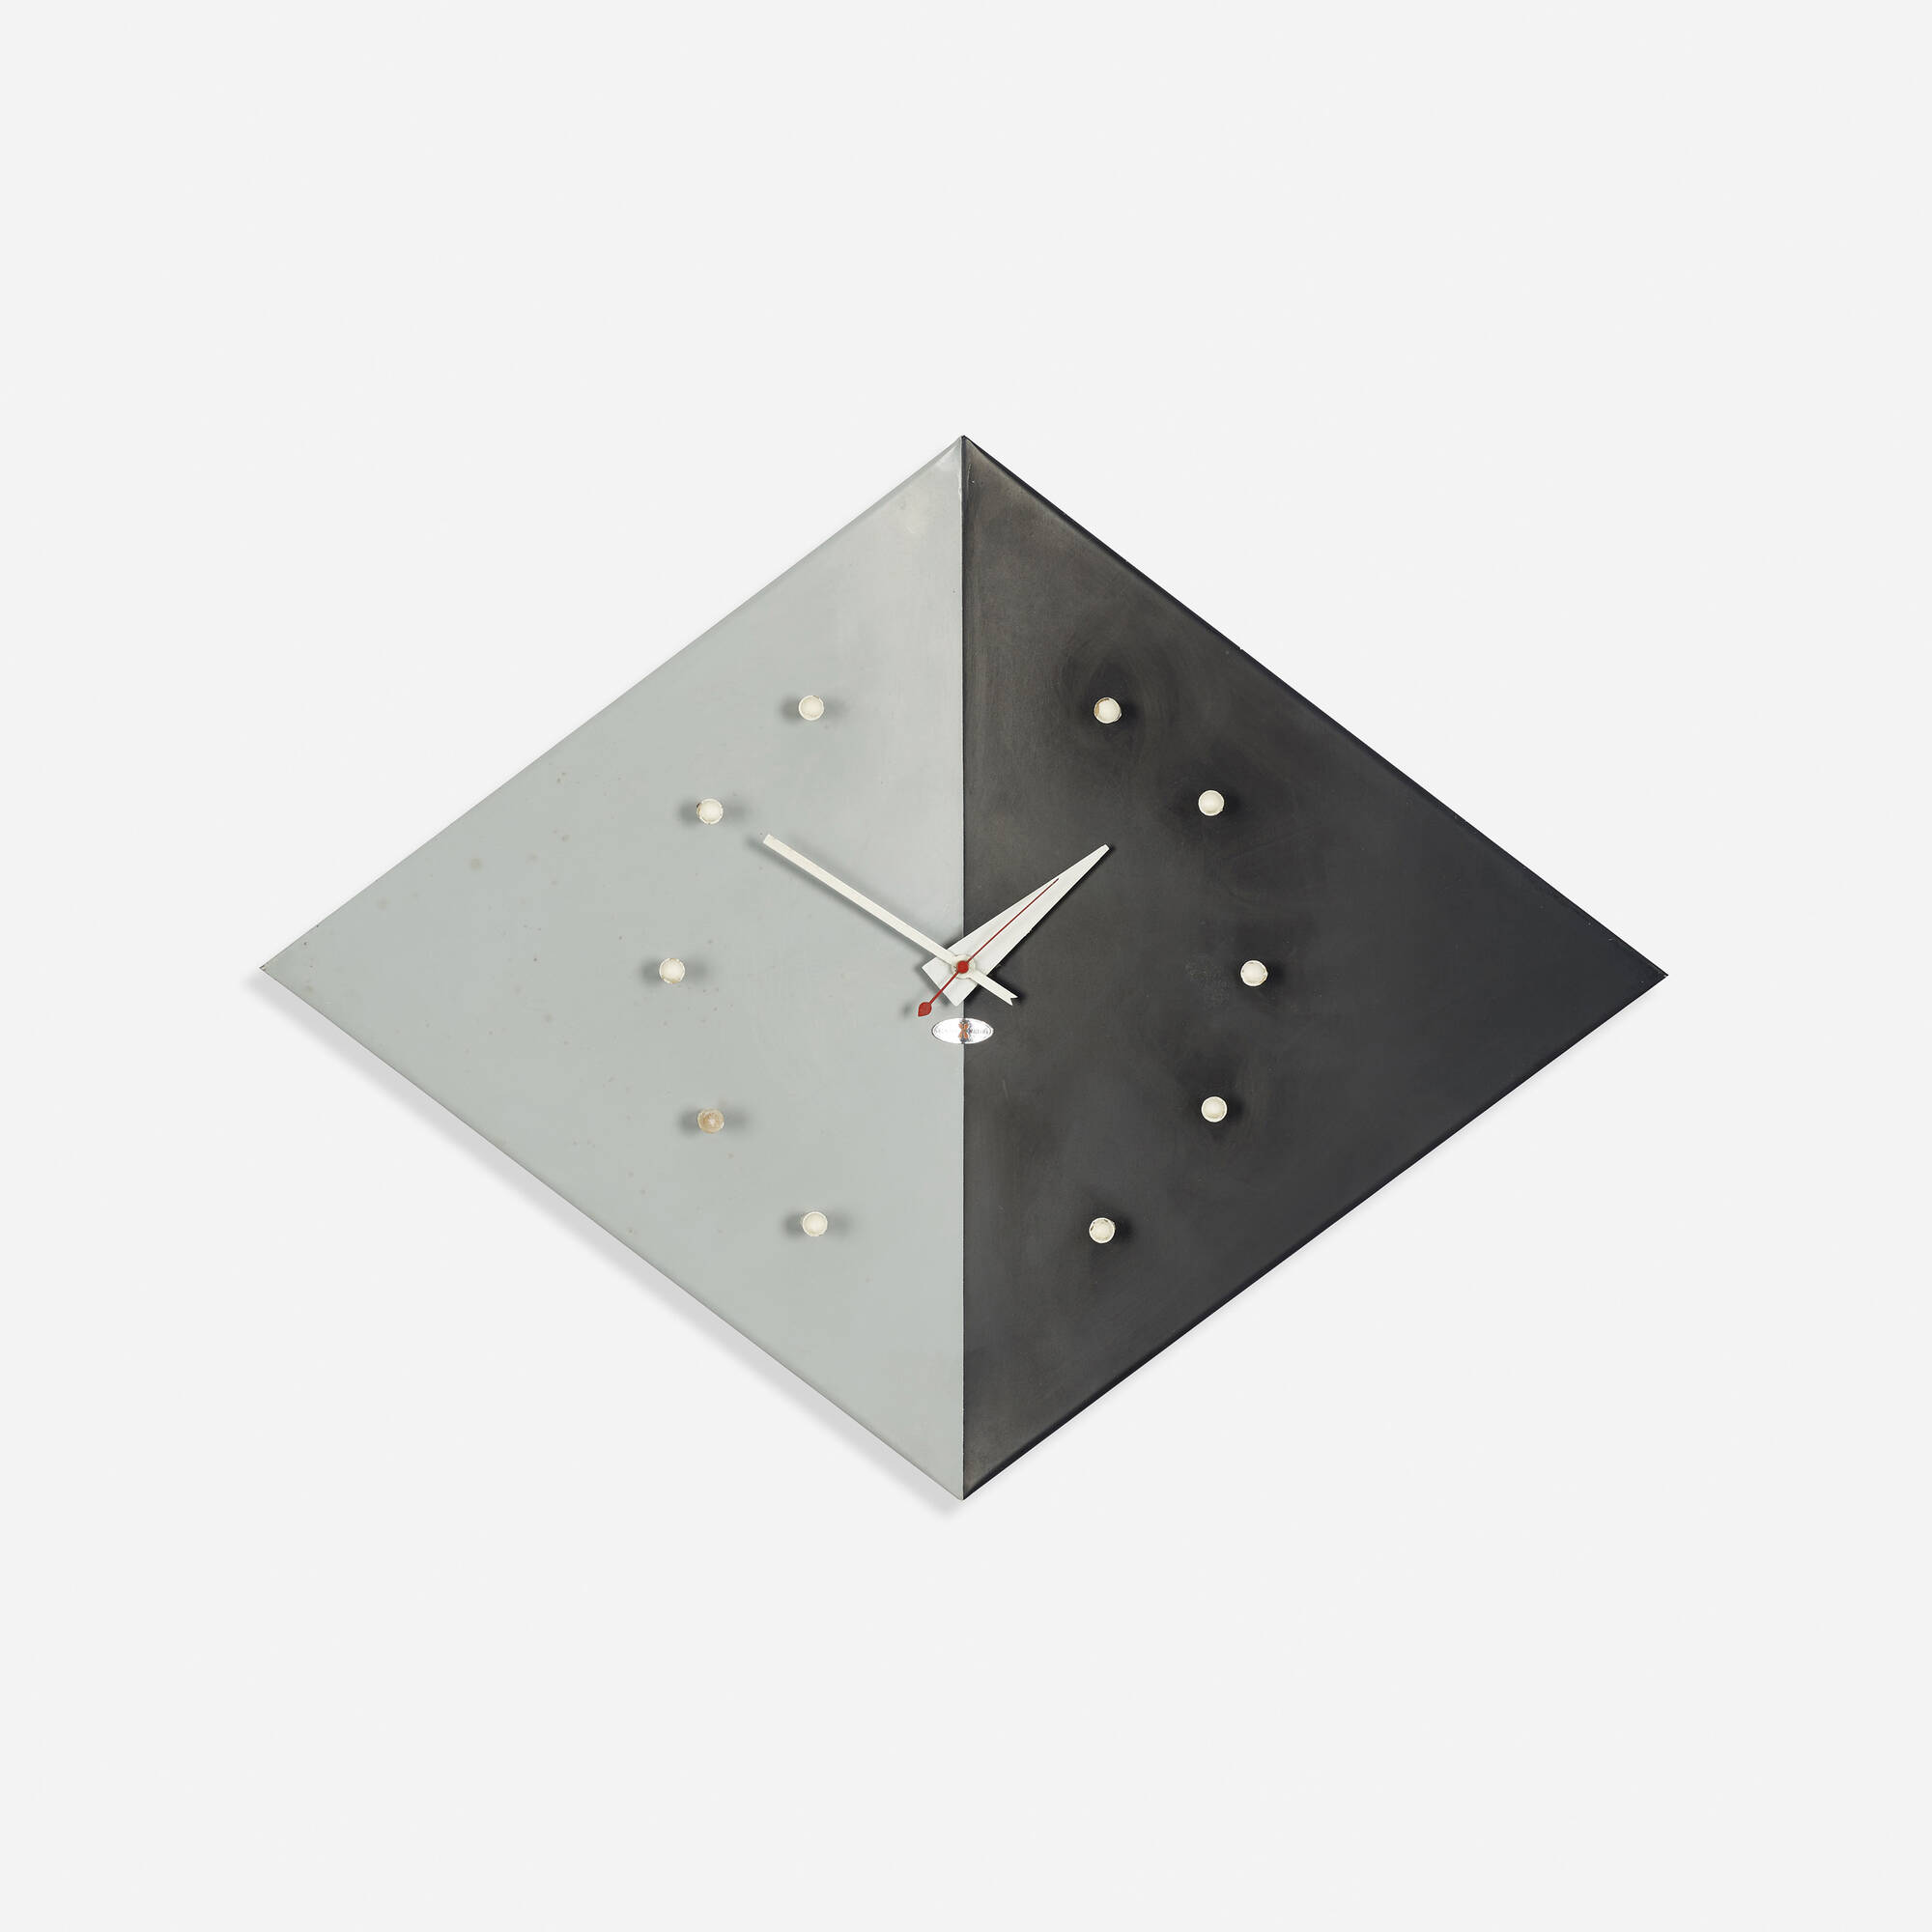 181: GEORGE NELSON & ASSOCIATES, Kite wall clock, model 2201C